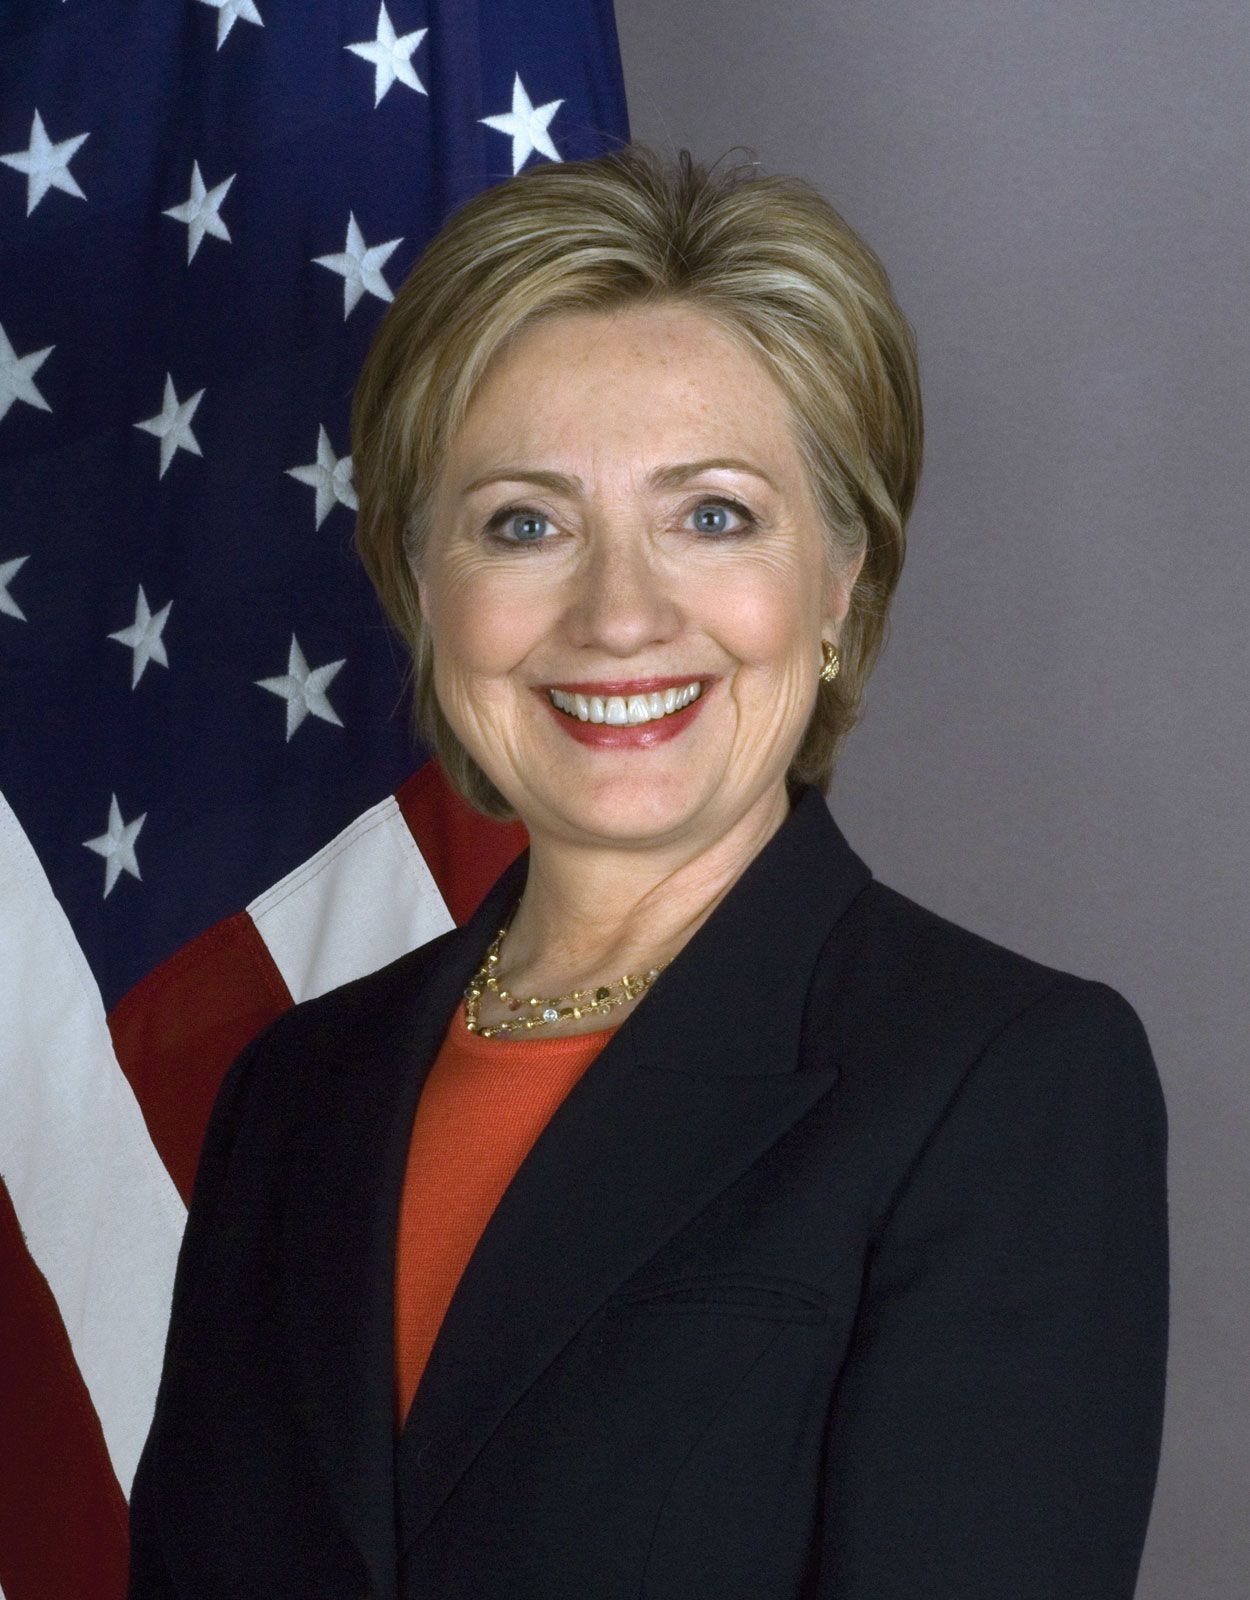 Hillary Clinton | Biography, Politics, & Facts | Britannica